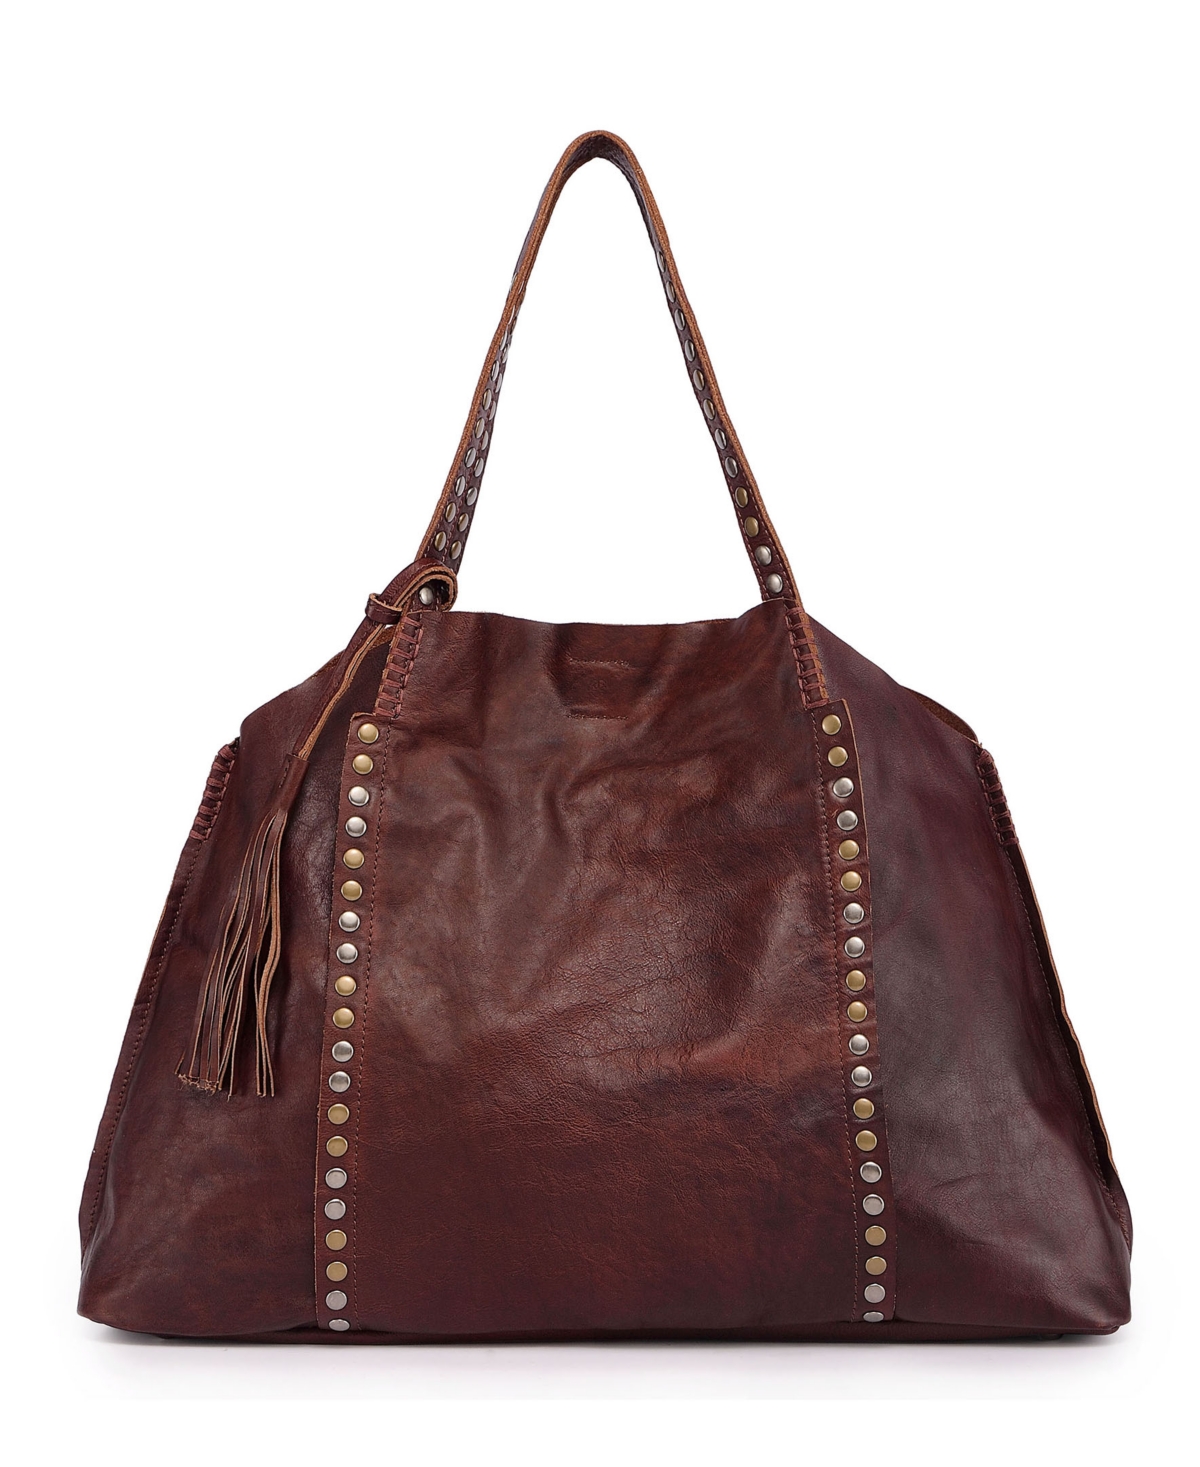 Women's Genuine Leather Birch Tote Bag - Aqua